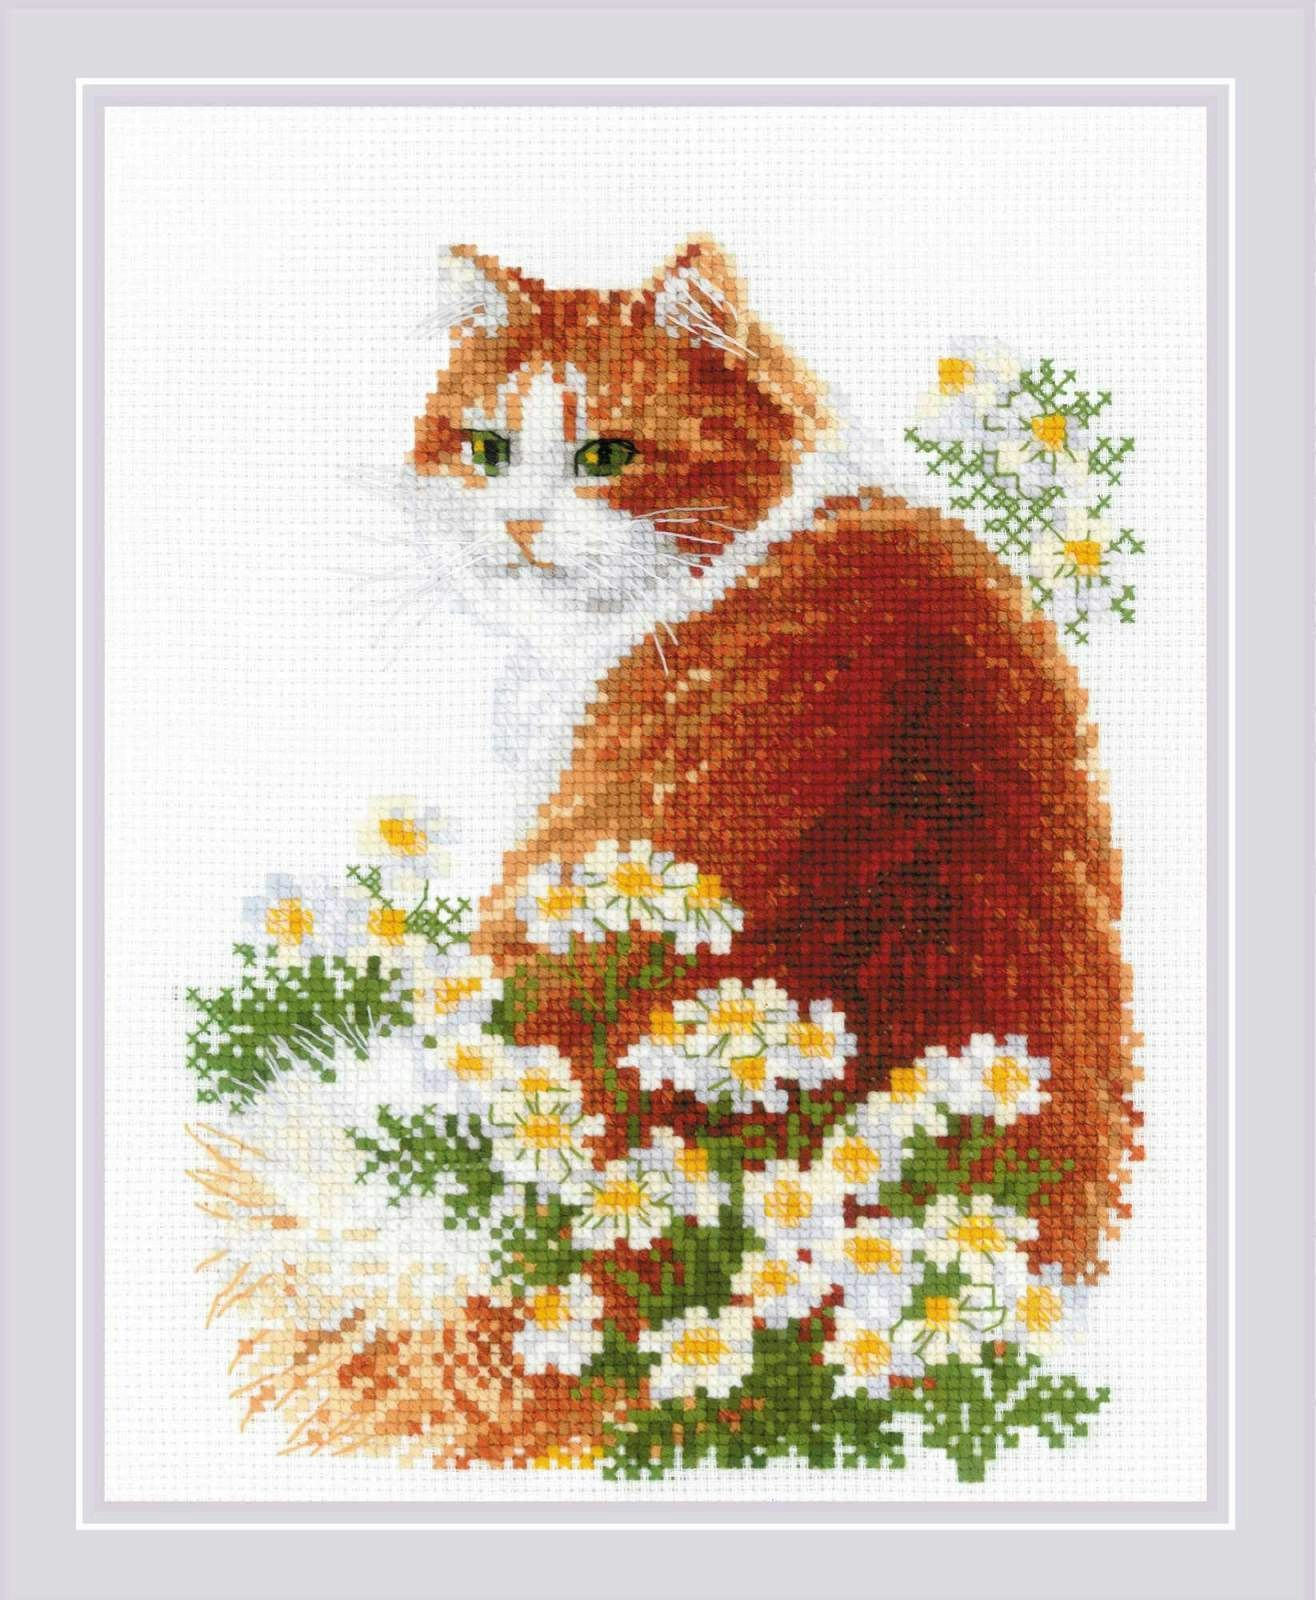 Broderikit Tavla Rödhårig katt i blommor